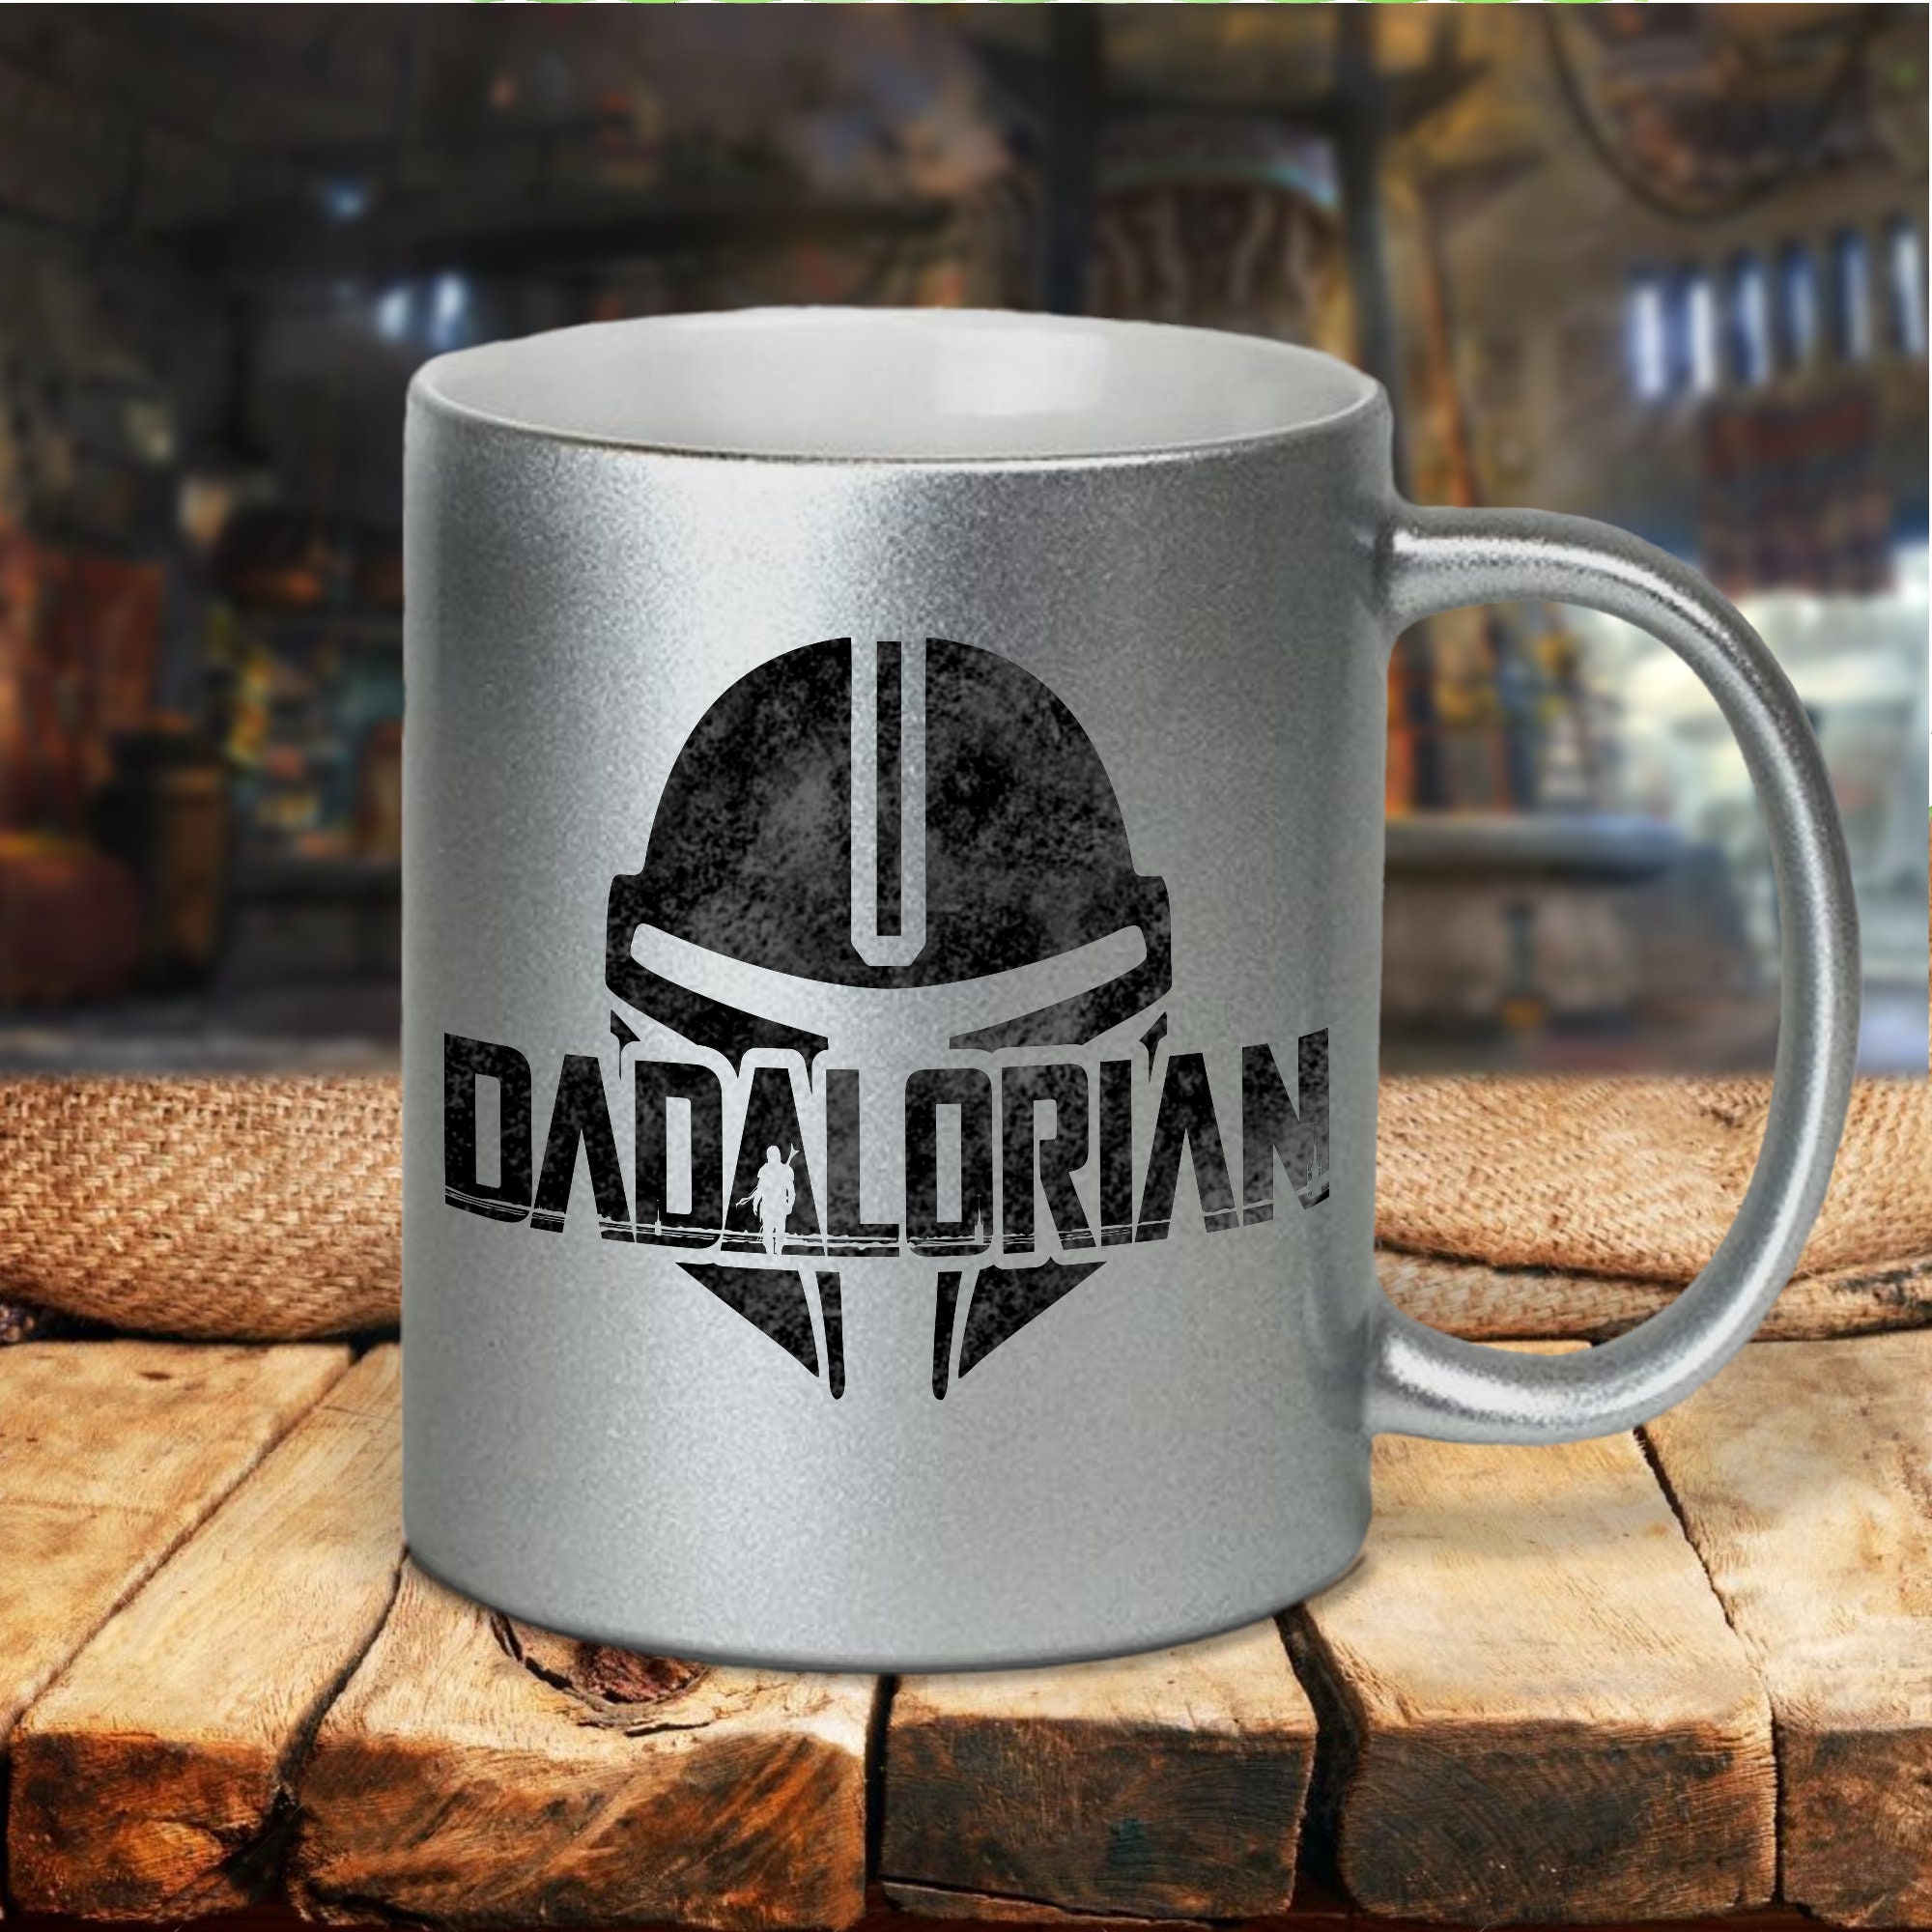 Star Wars - Mandalorian The Child Good Side 12 oz. Ceramic Mug